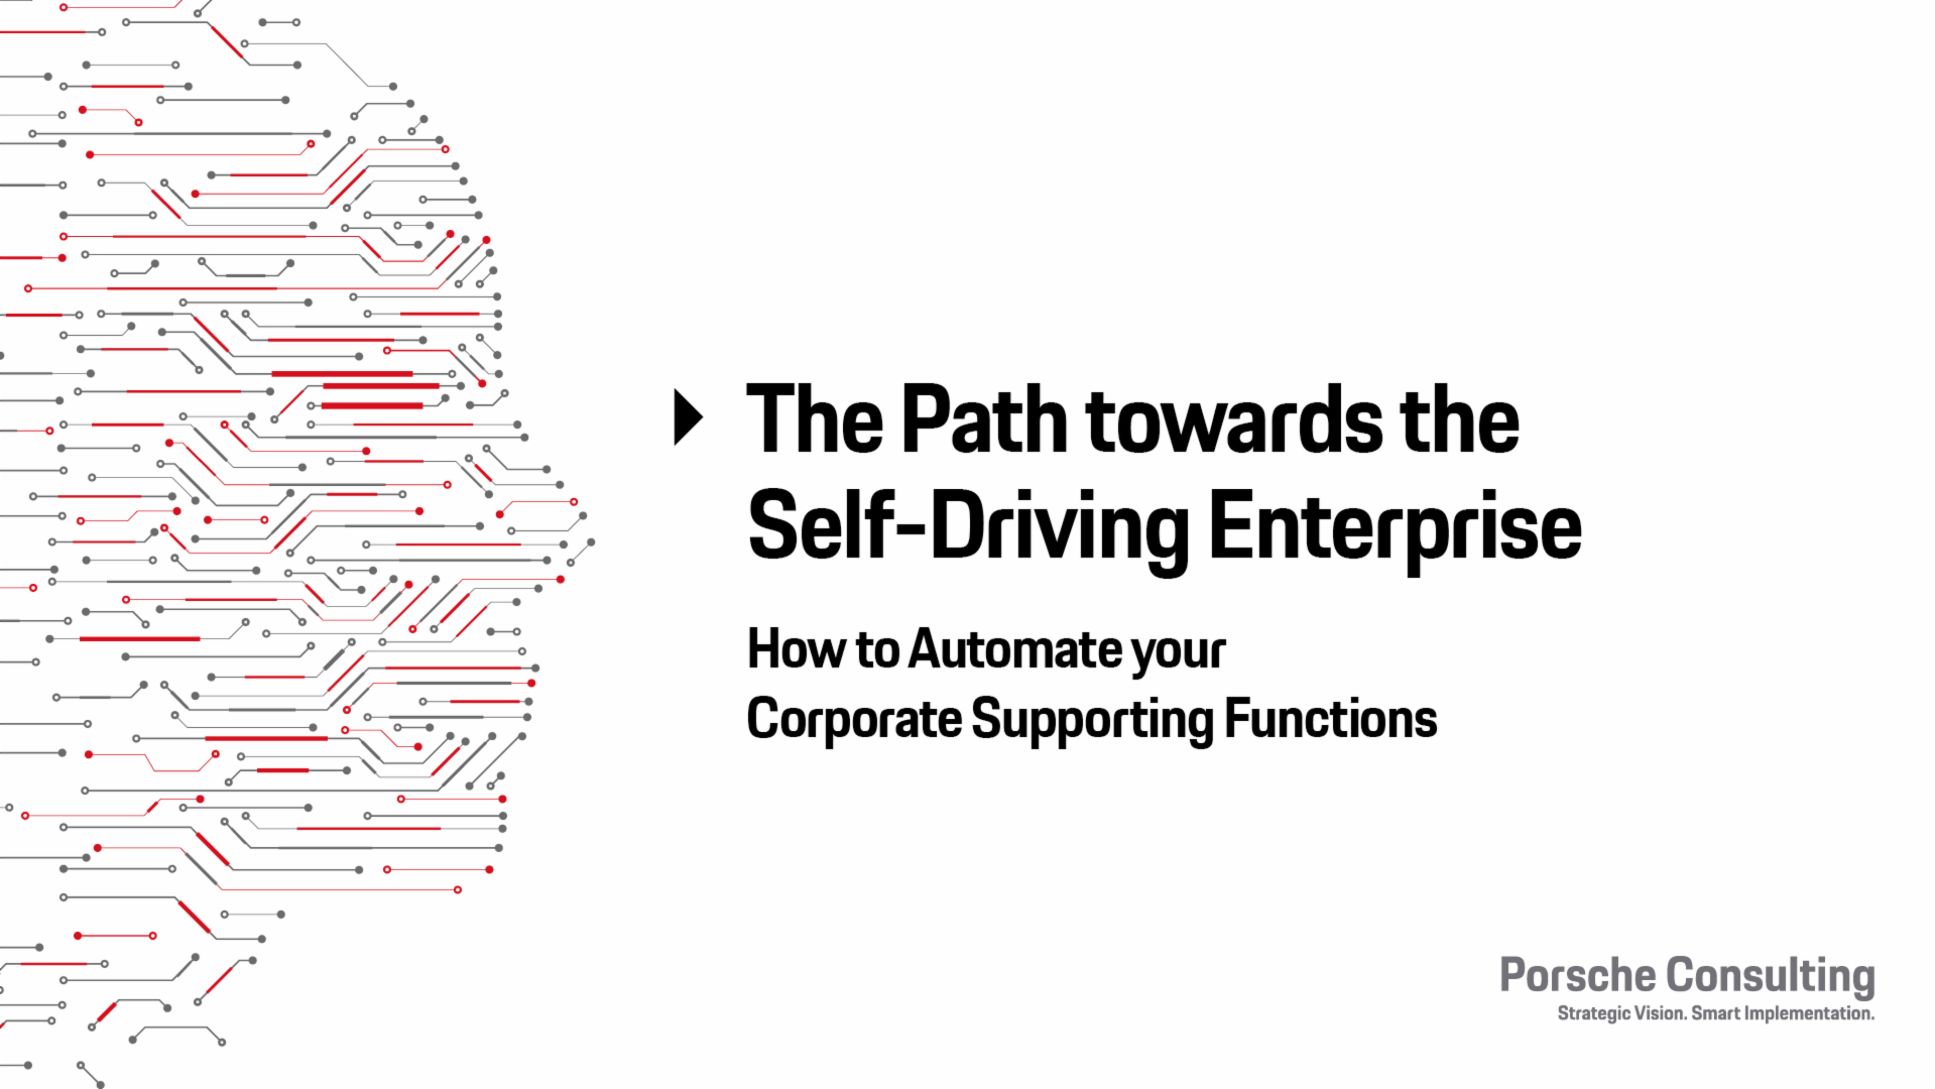 The Path towards the Self-Driving Enterprise, 2018, Porsche Consulting GmbH